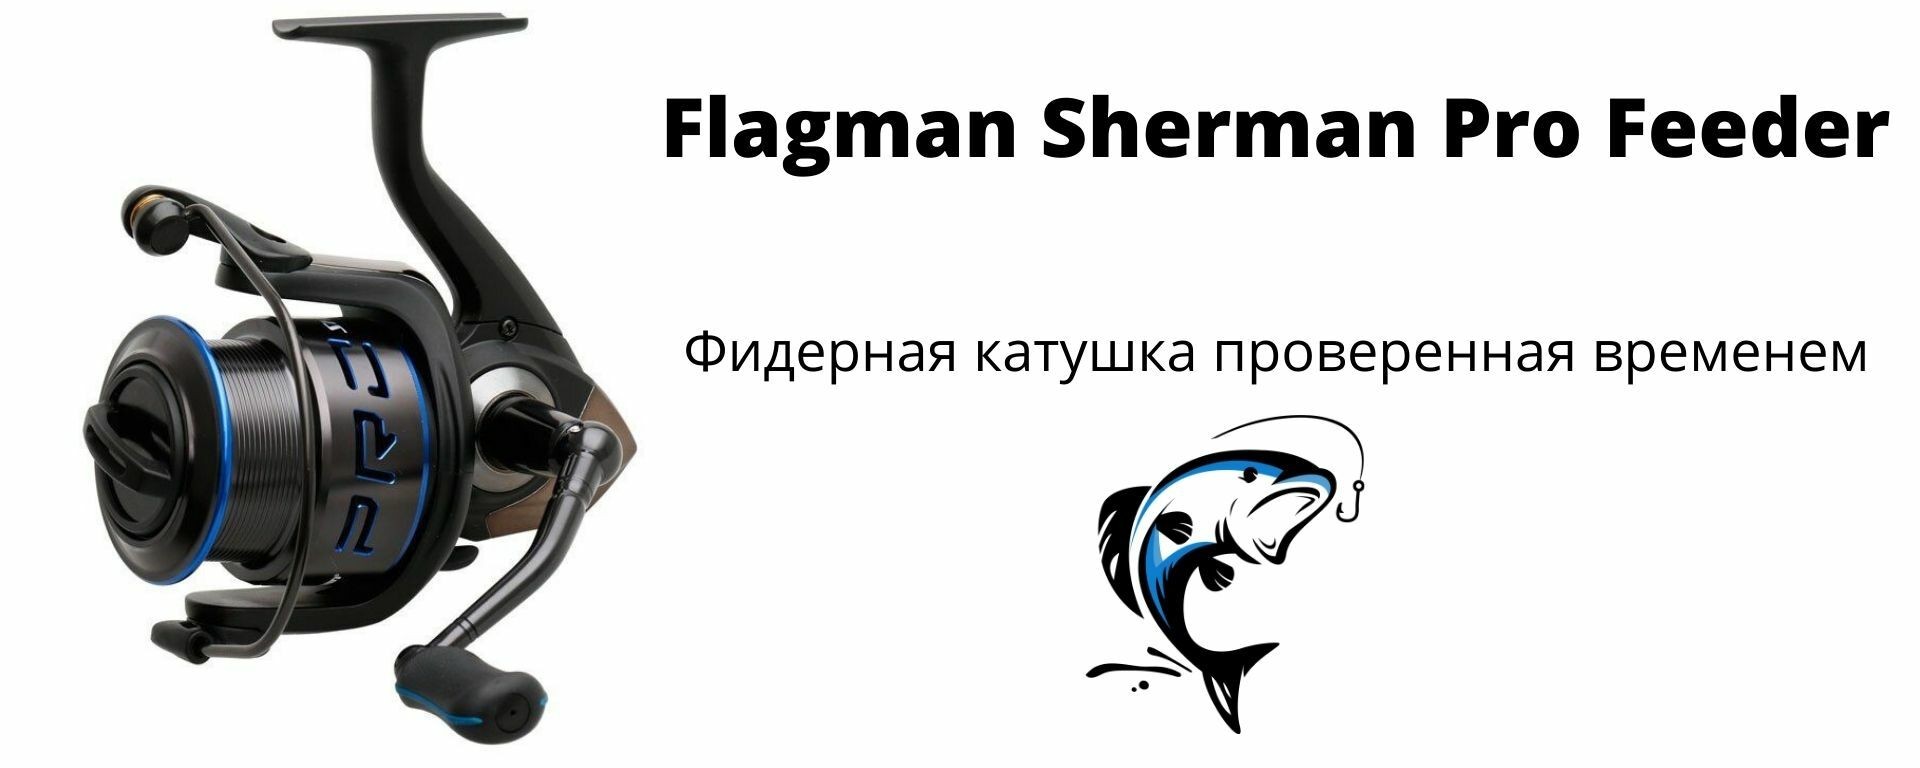 Катушка фидерная Flagman Sherman Pro Feeder